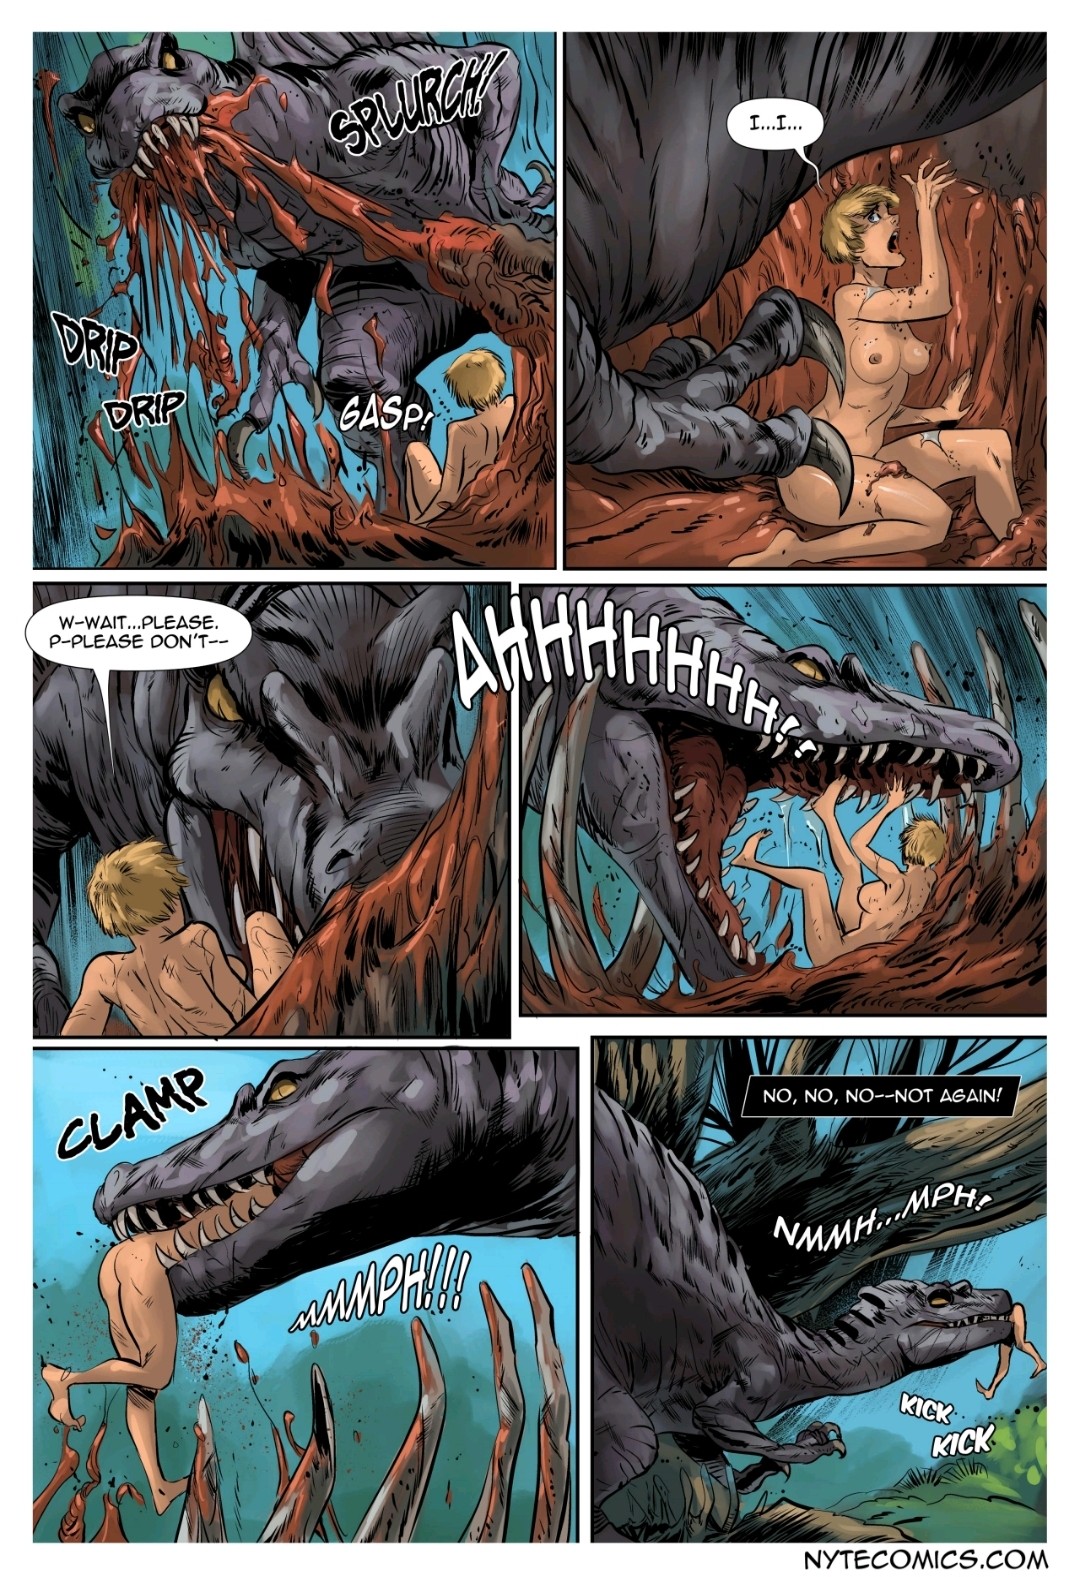 Jurassic park porn comic strip